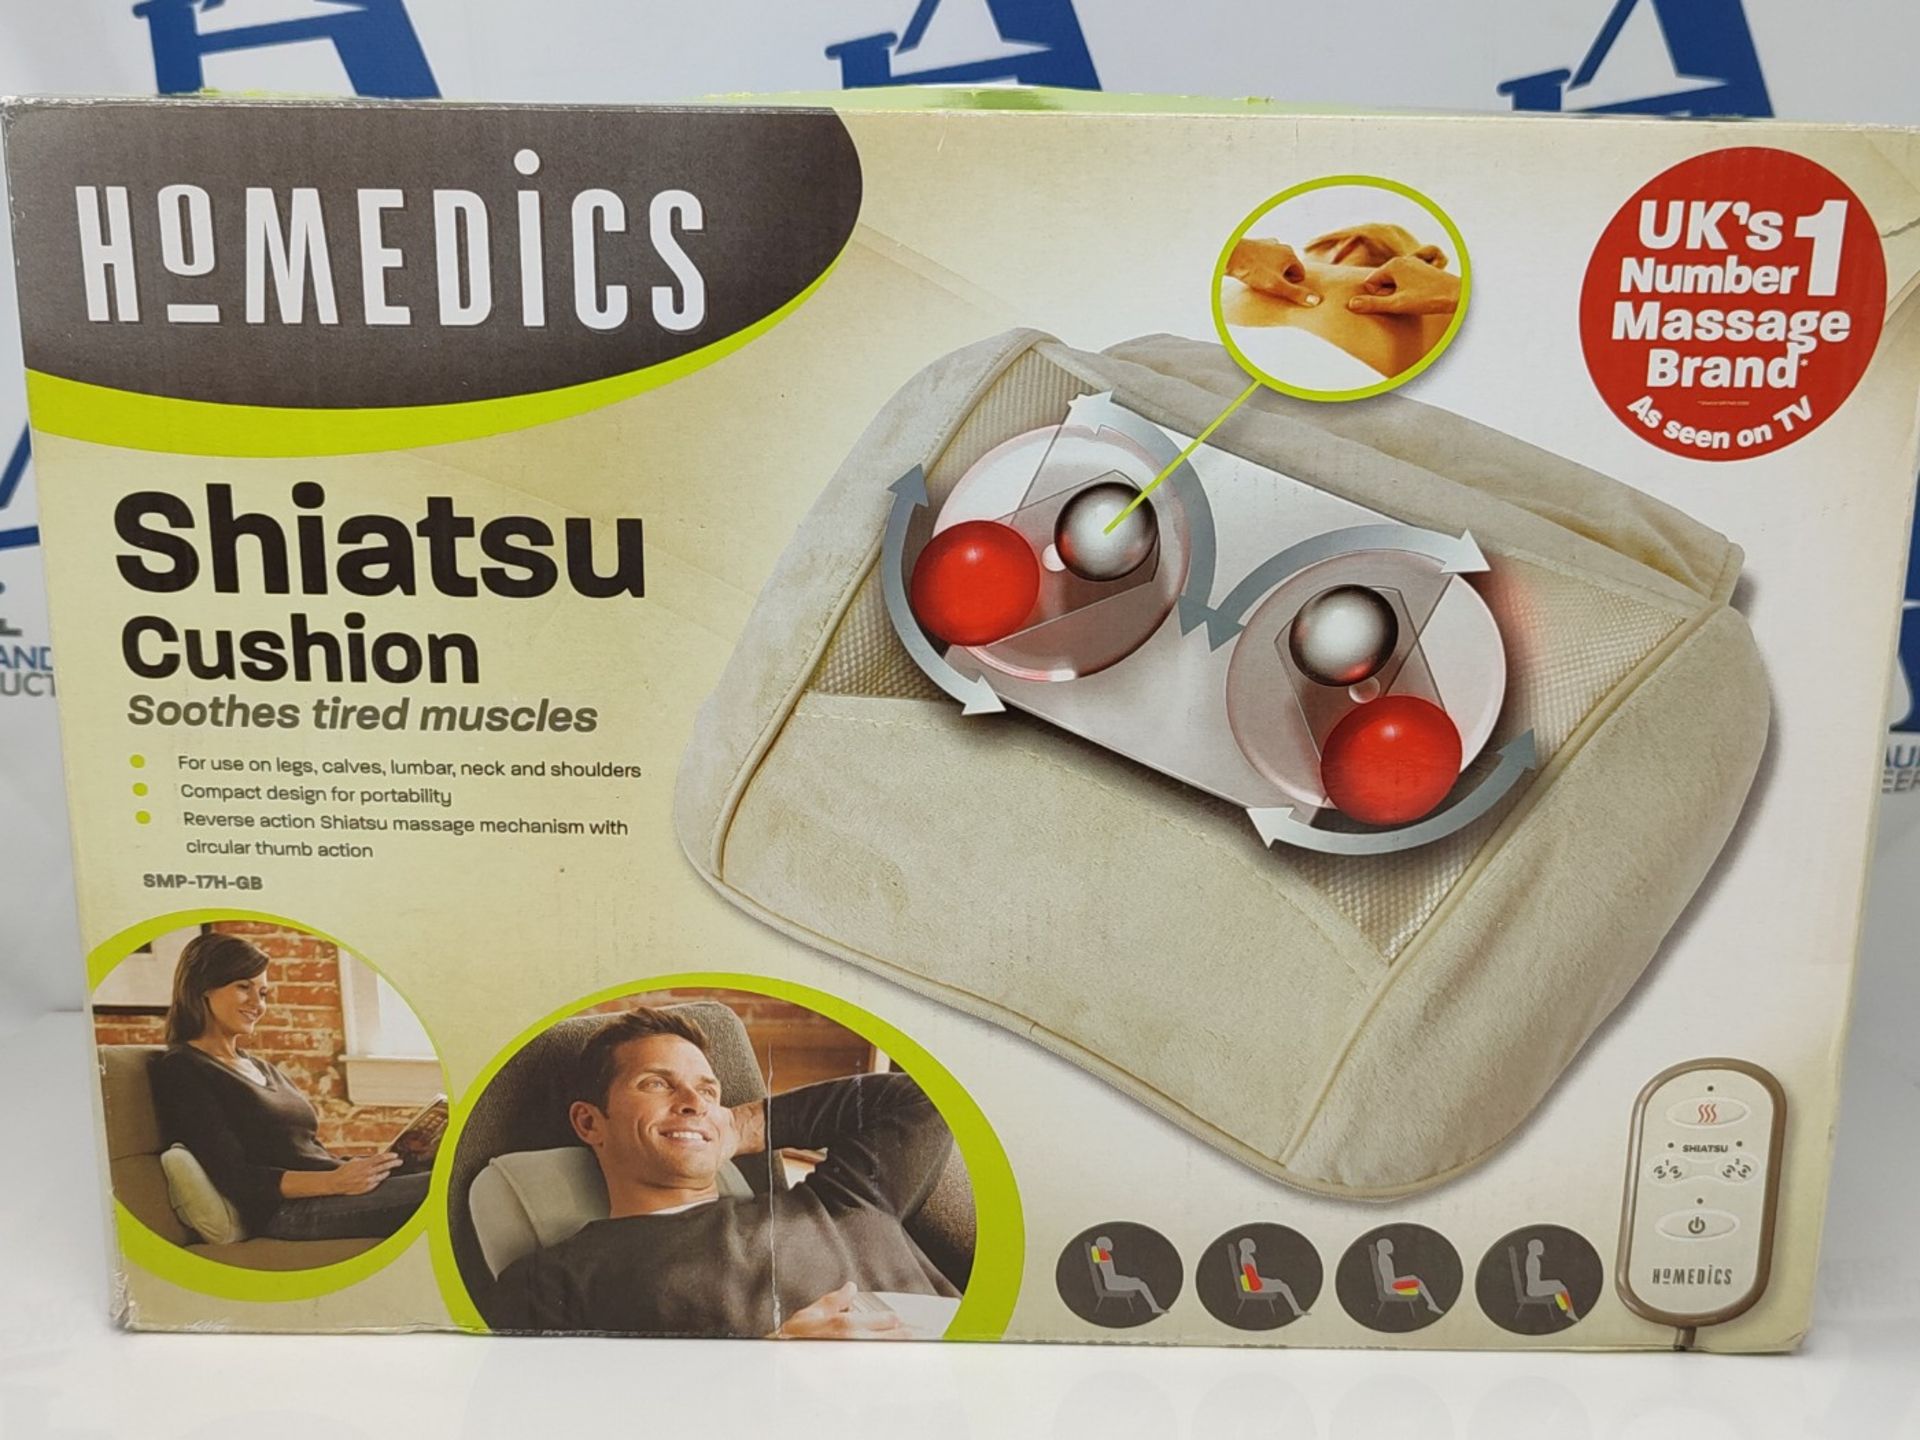 Homedics shiatsu cushion soothes tired muscles